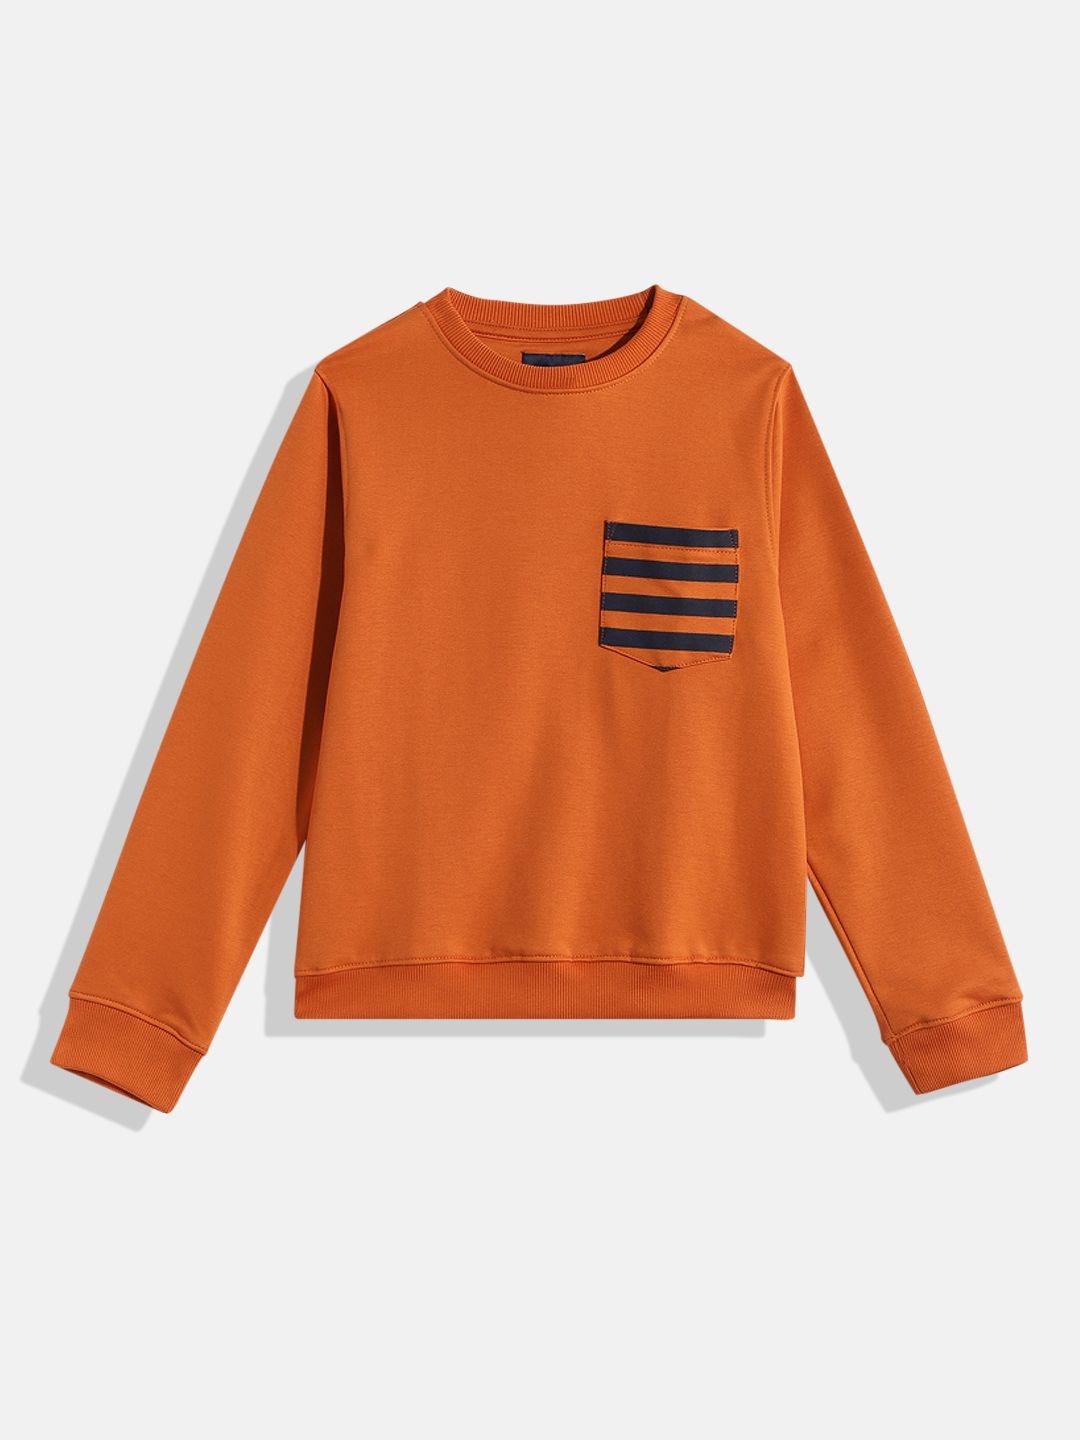 m&h juniors boys orange sweatshirt